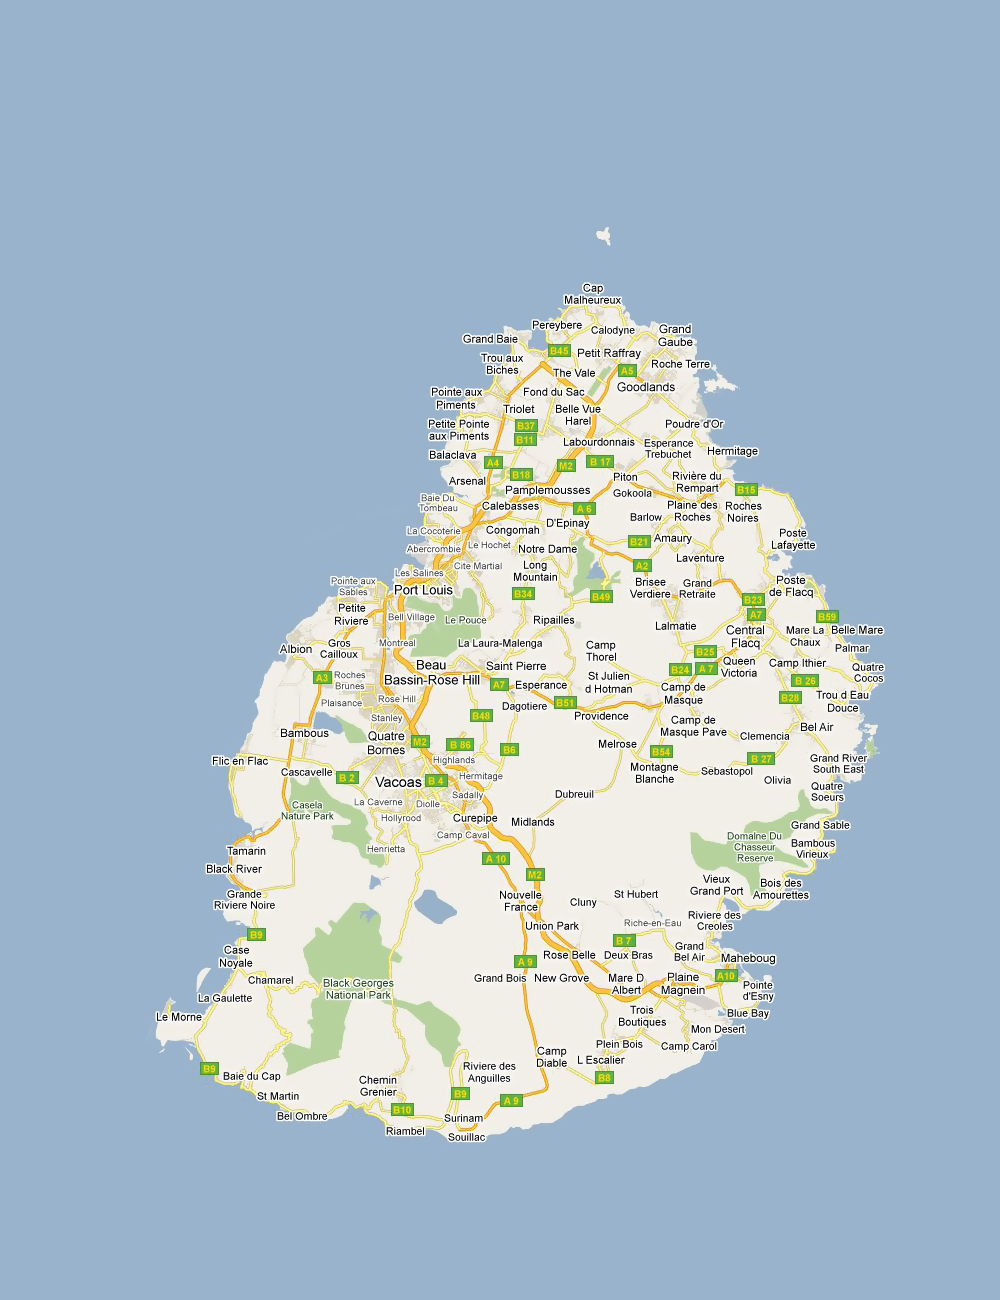 mauritius travel map